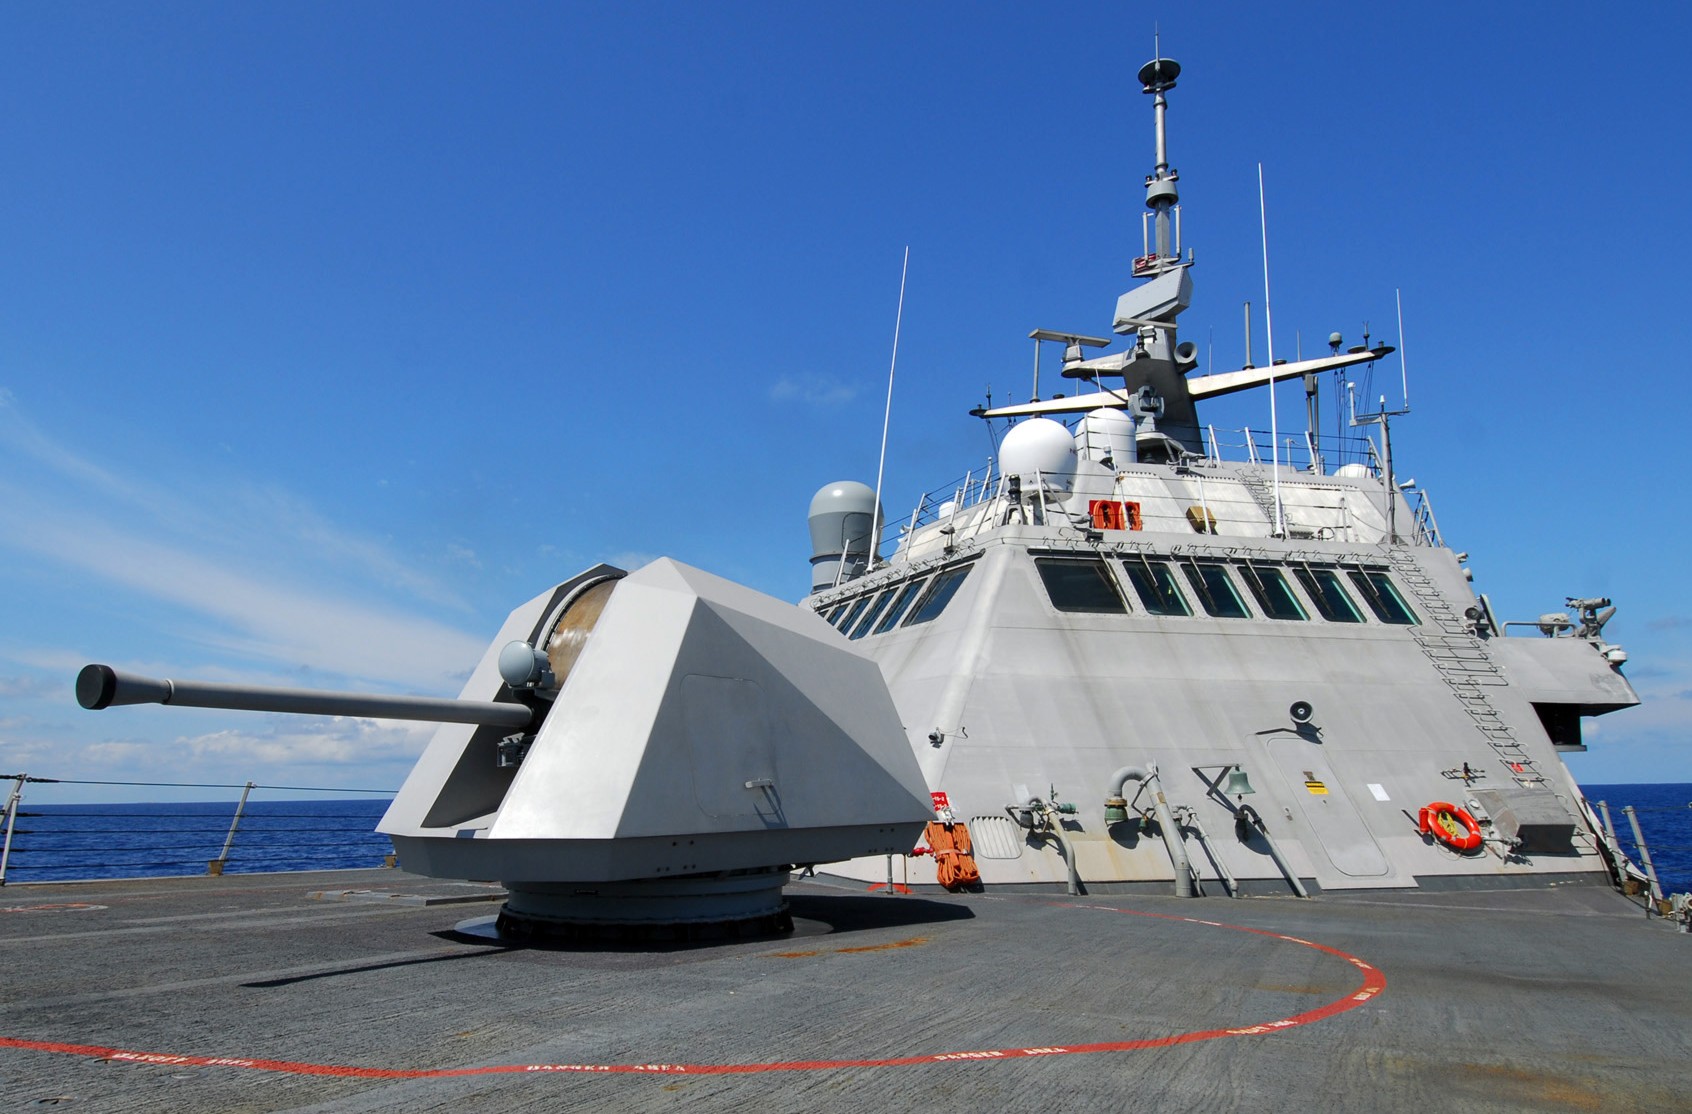 lcs-1 uss freedom class littoral combat ship us navy 93 bae mk.110 gun 57mm 2.2 inches